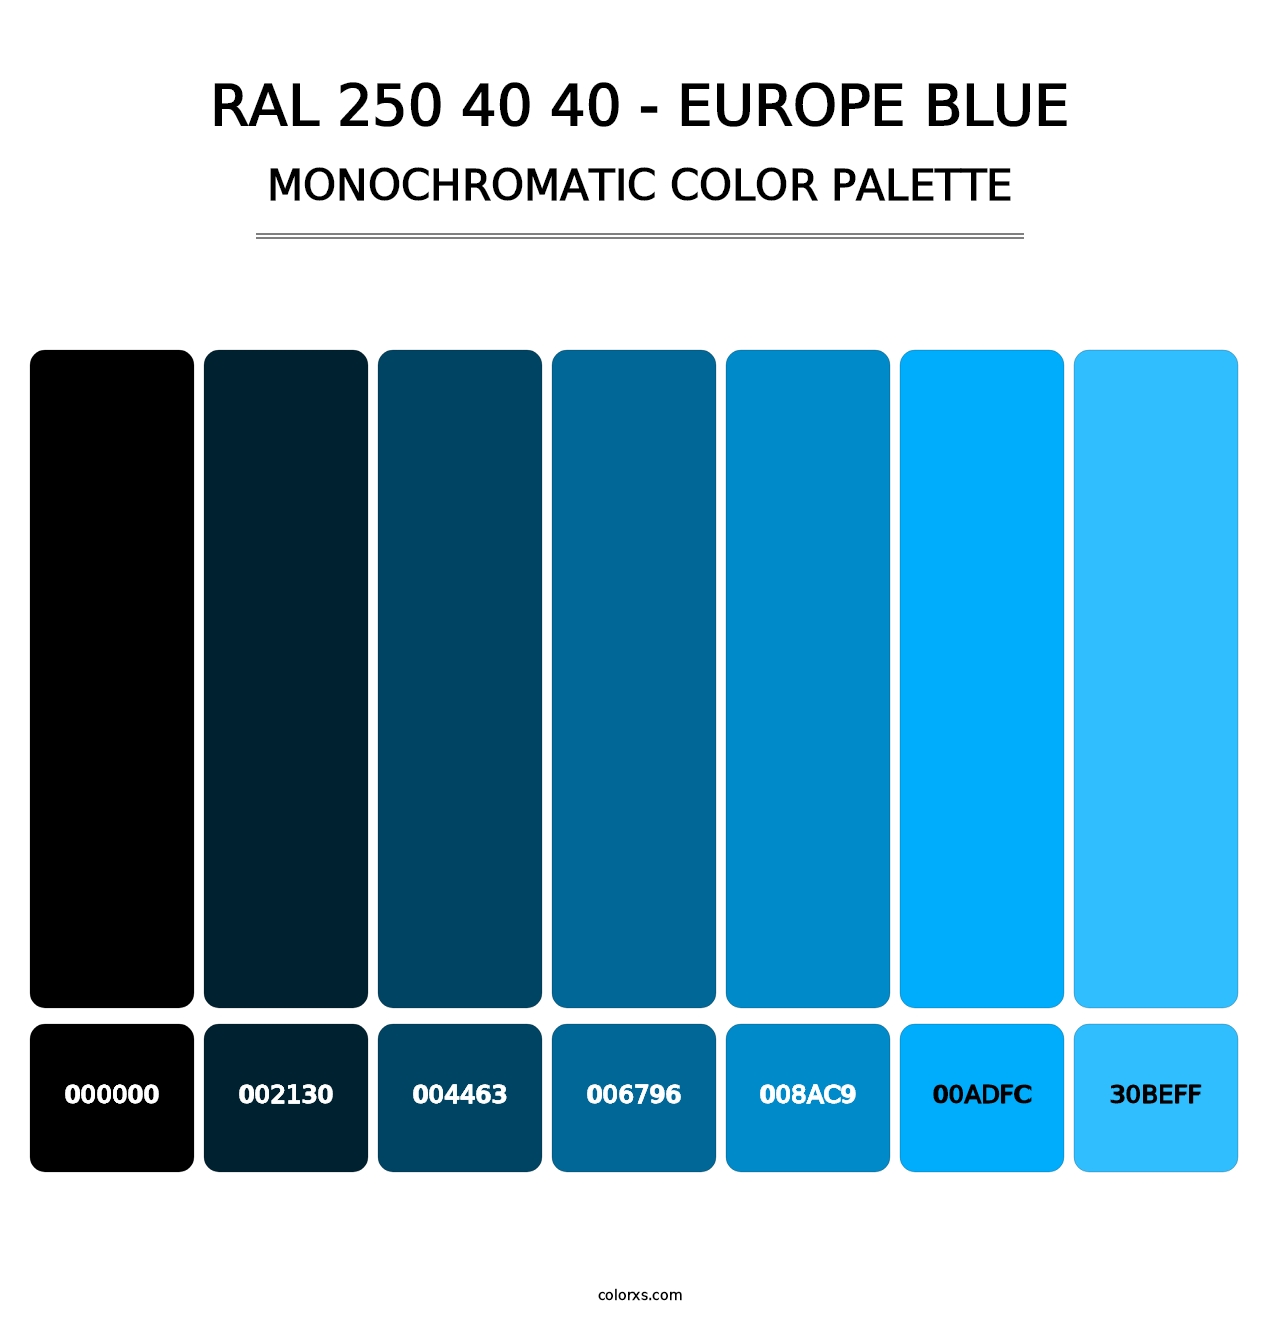 RAL 250 40 40 - Europe Blue - Monochromatic Color Palette